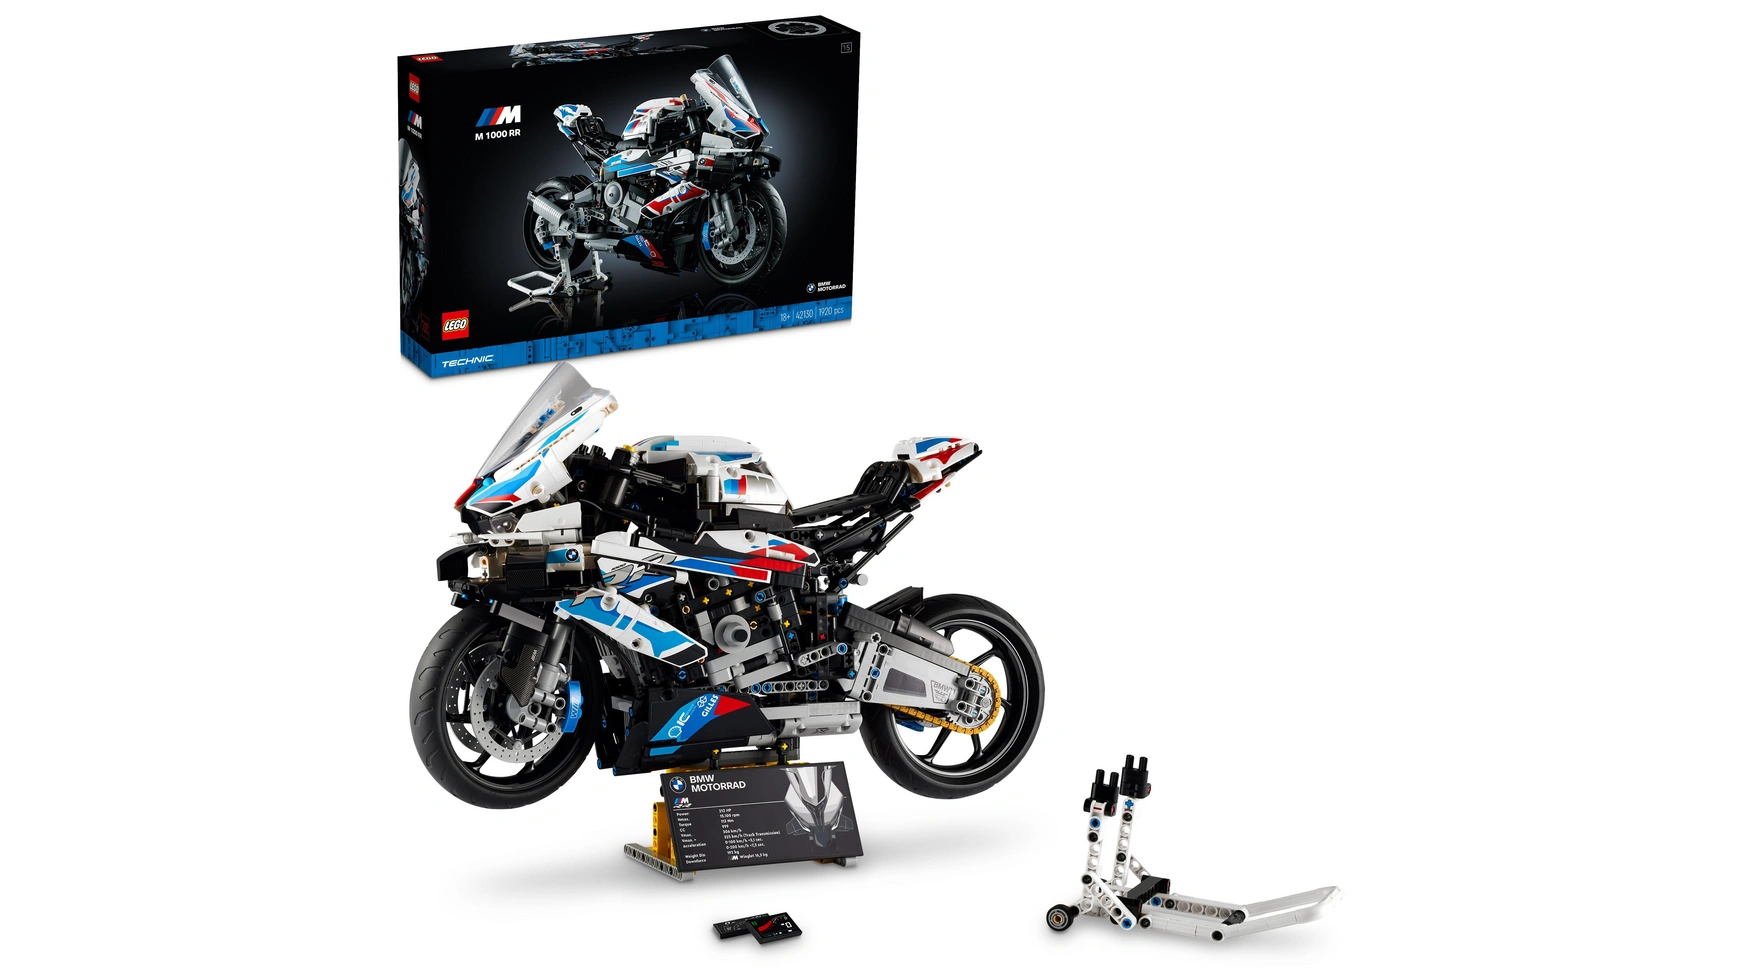 Lego Technic BMW M 1000 RR, модель мотоцикла для взрослых передняя ось мотоцикла ползунок колеса прокладки защита для передней оси мотоцикла rsv4 rr rsv4 rf 2009 2021 tuono v4 rr 2009 2021